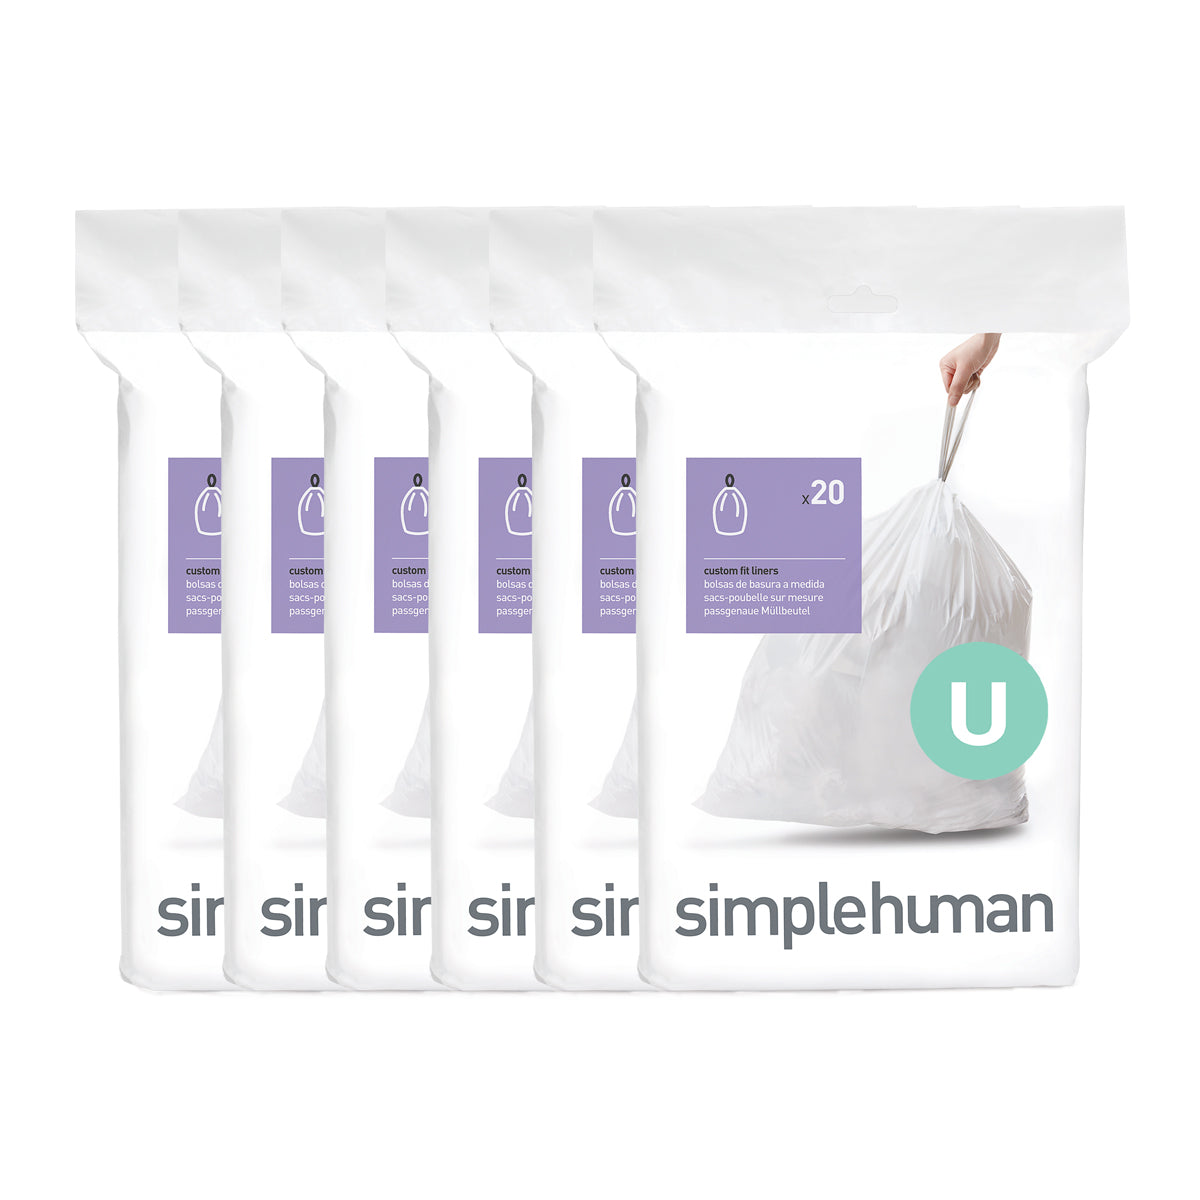 simplehuman® Trash Liners - Code J S-23531 - Uline